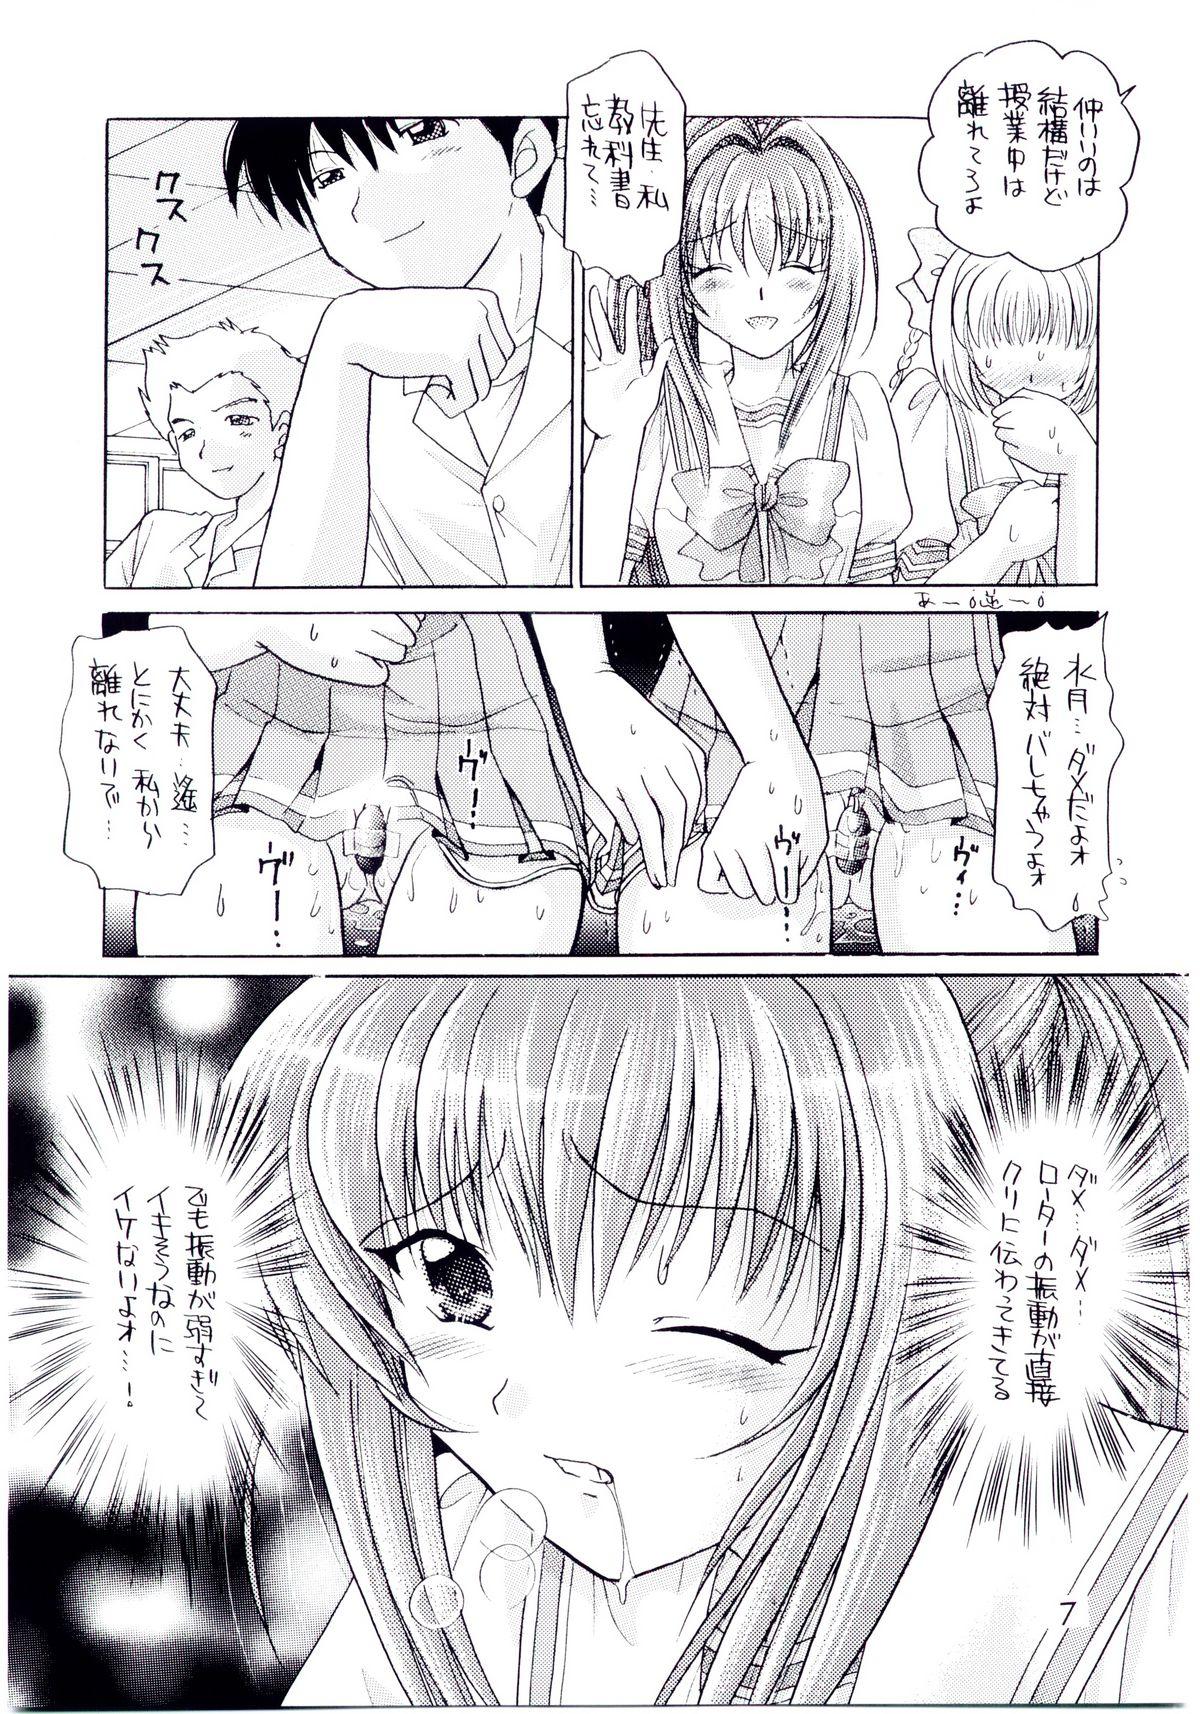 Gay Party Kimi ga nozomu eien zettai zetsumei 2 - Kimi ga nozomu eien Eating Pussy - Page 6